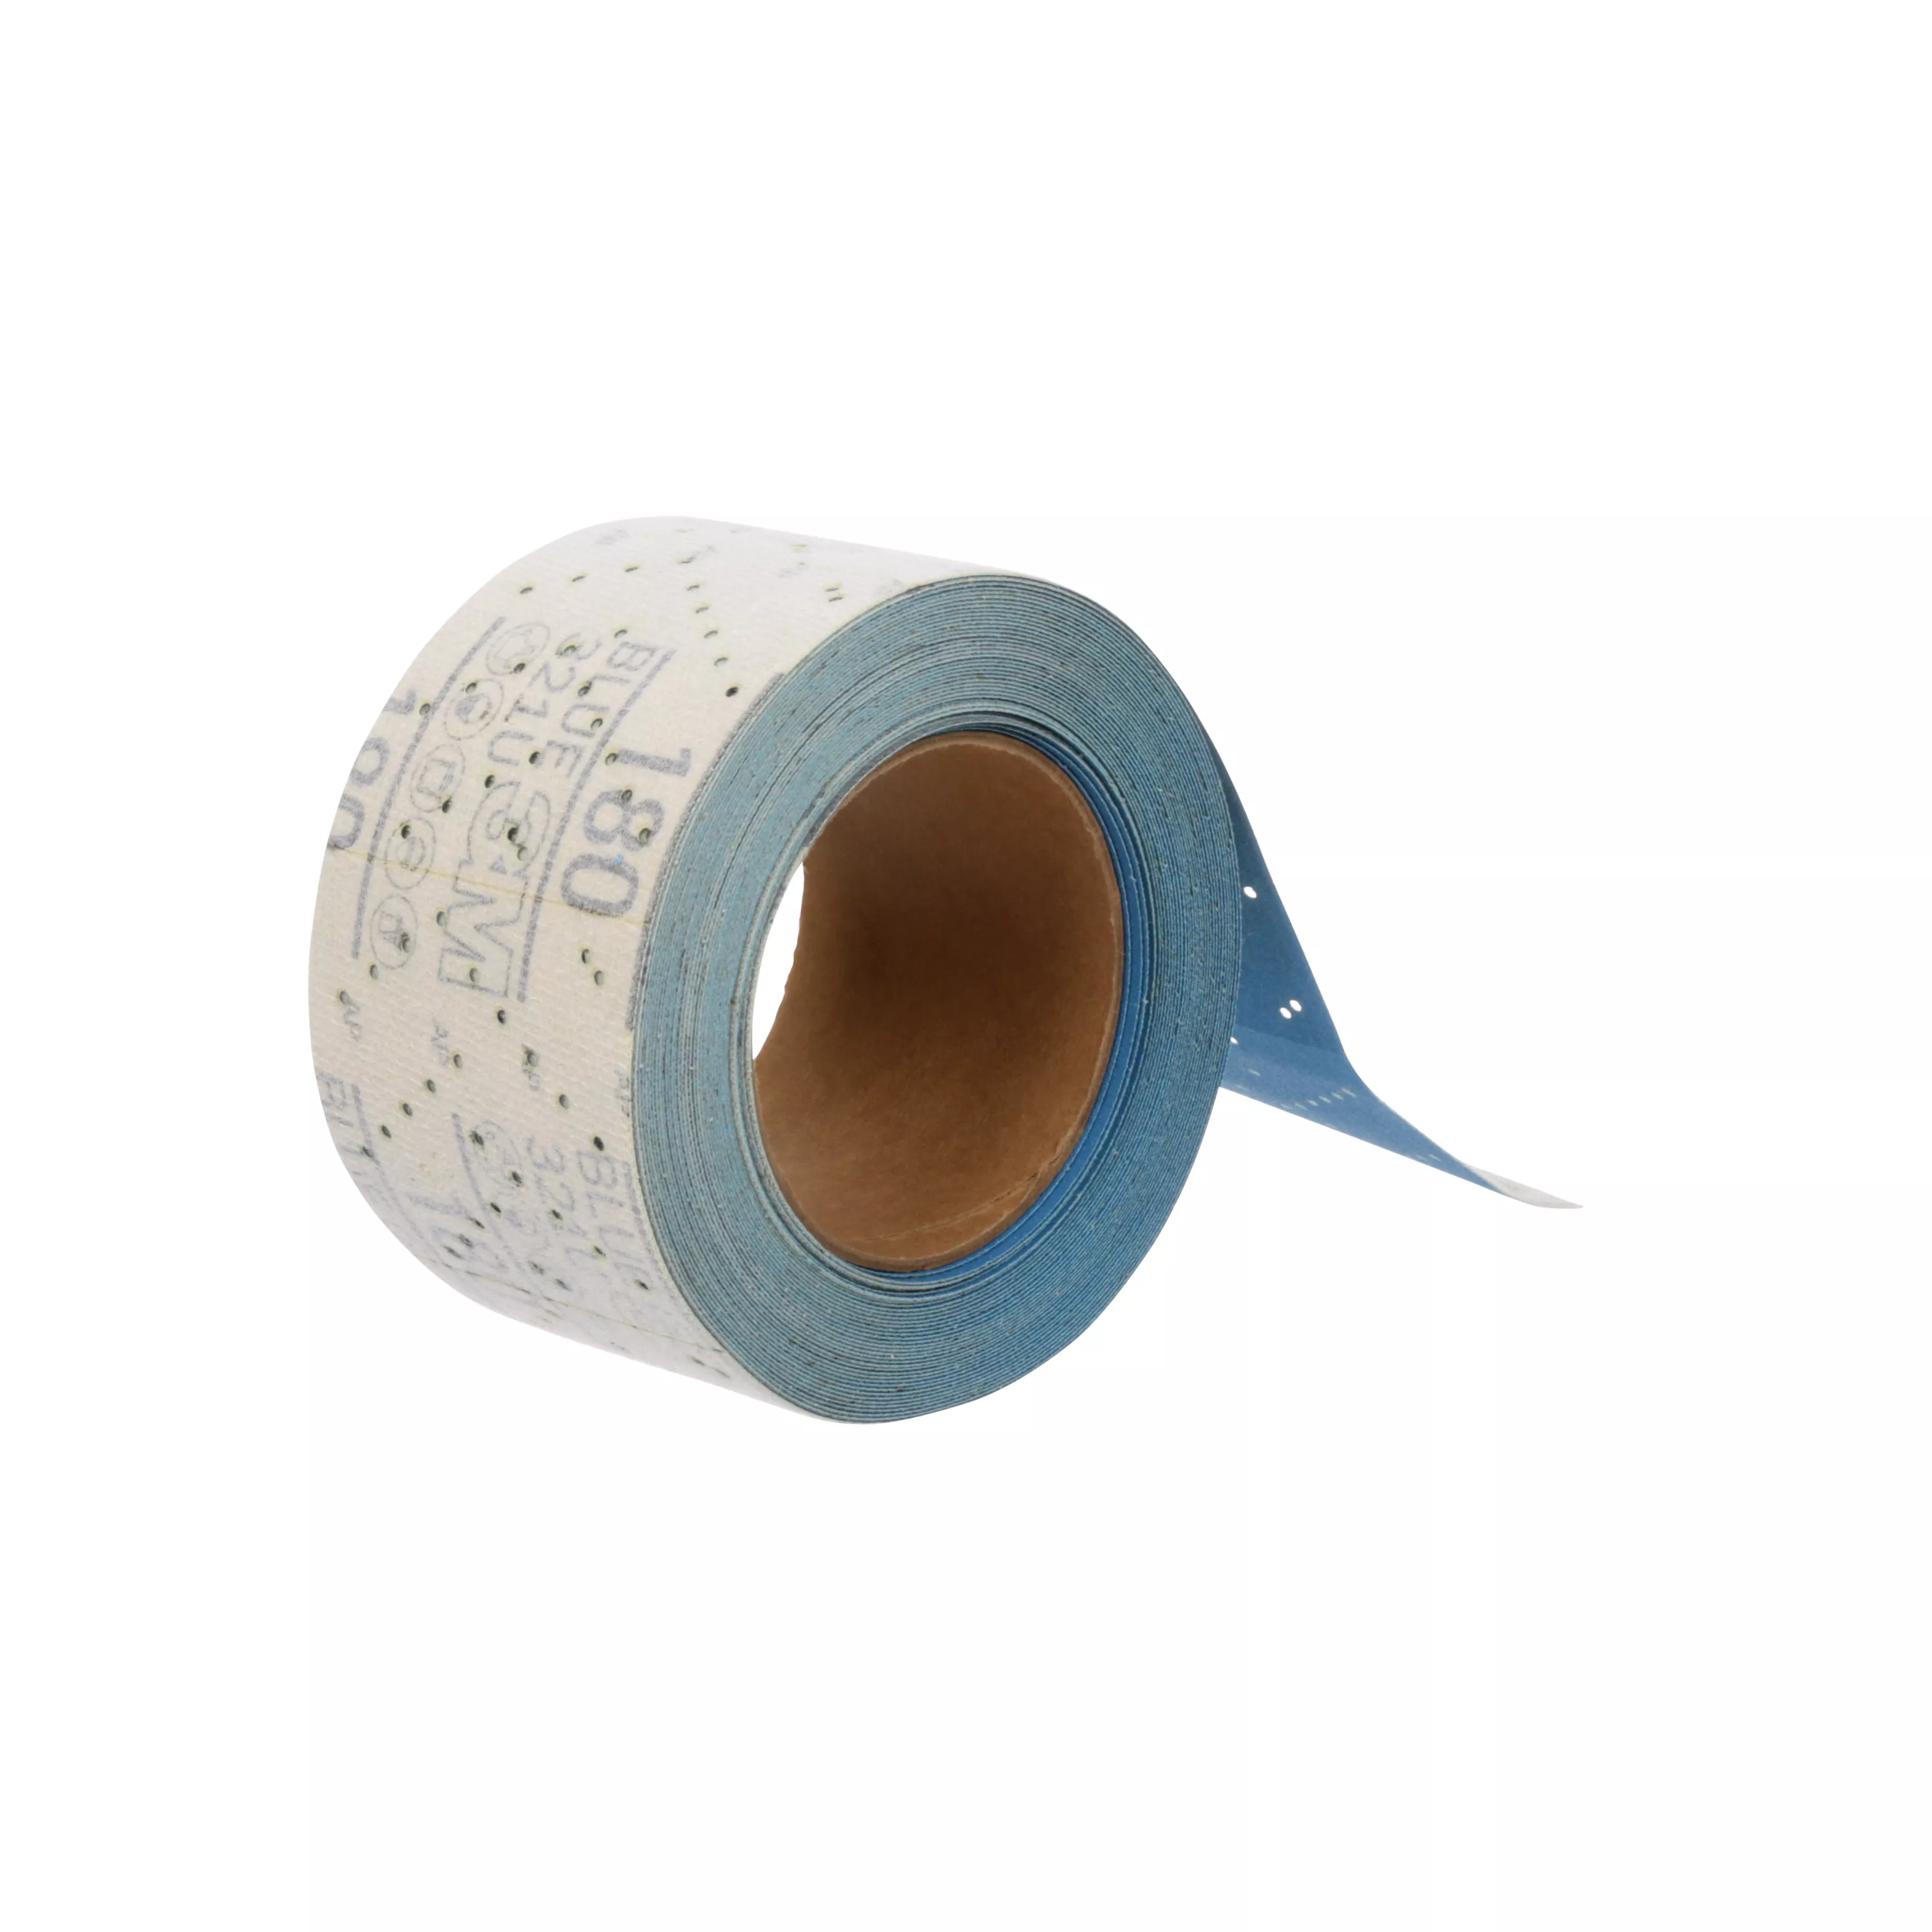 SKU 7100091070 | 3M™ Hookit™ Blue Abrasive Sheet Roll Multi-hole